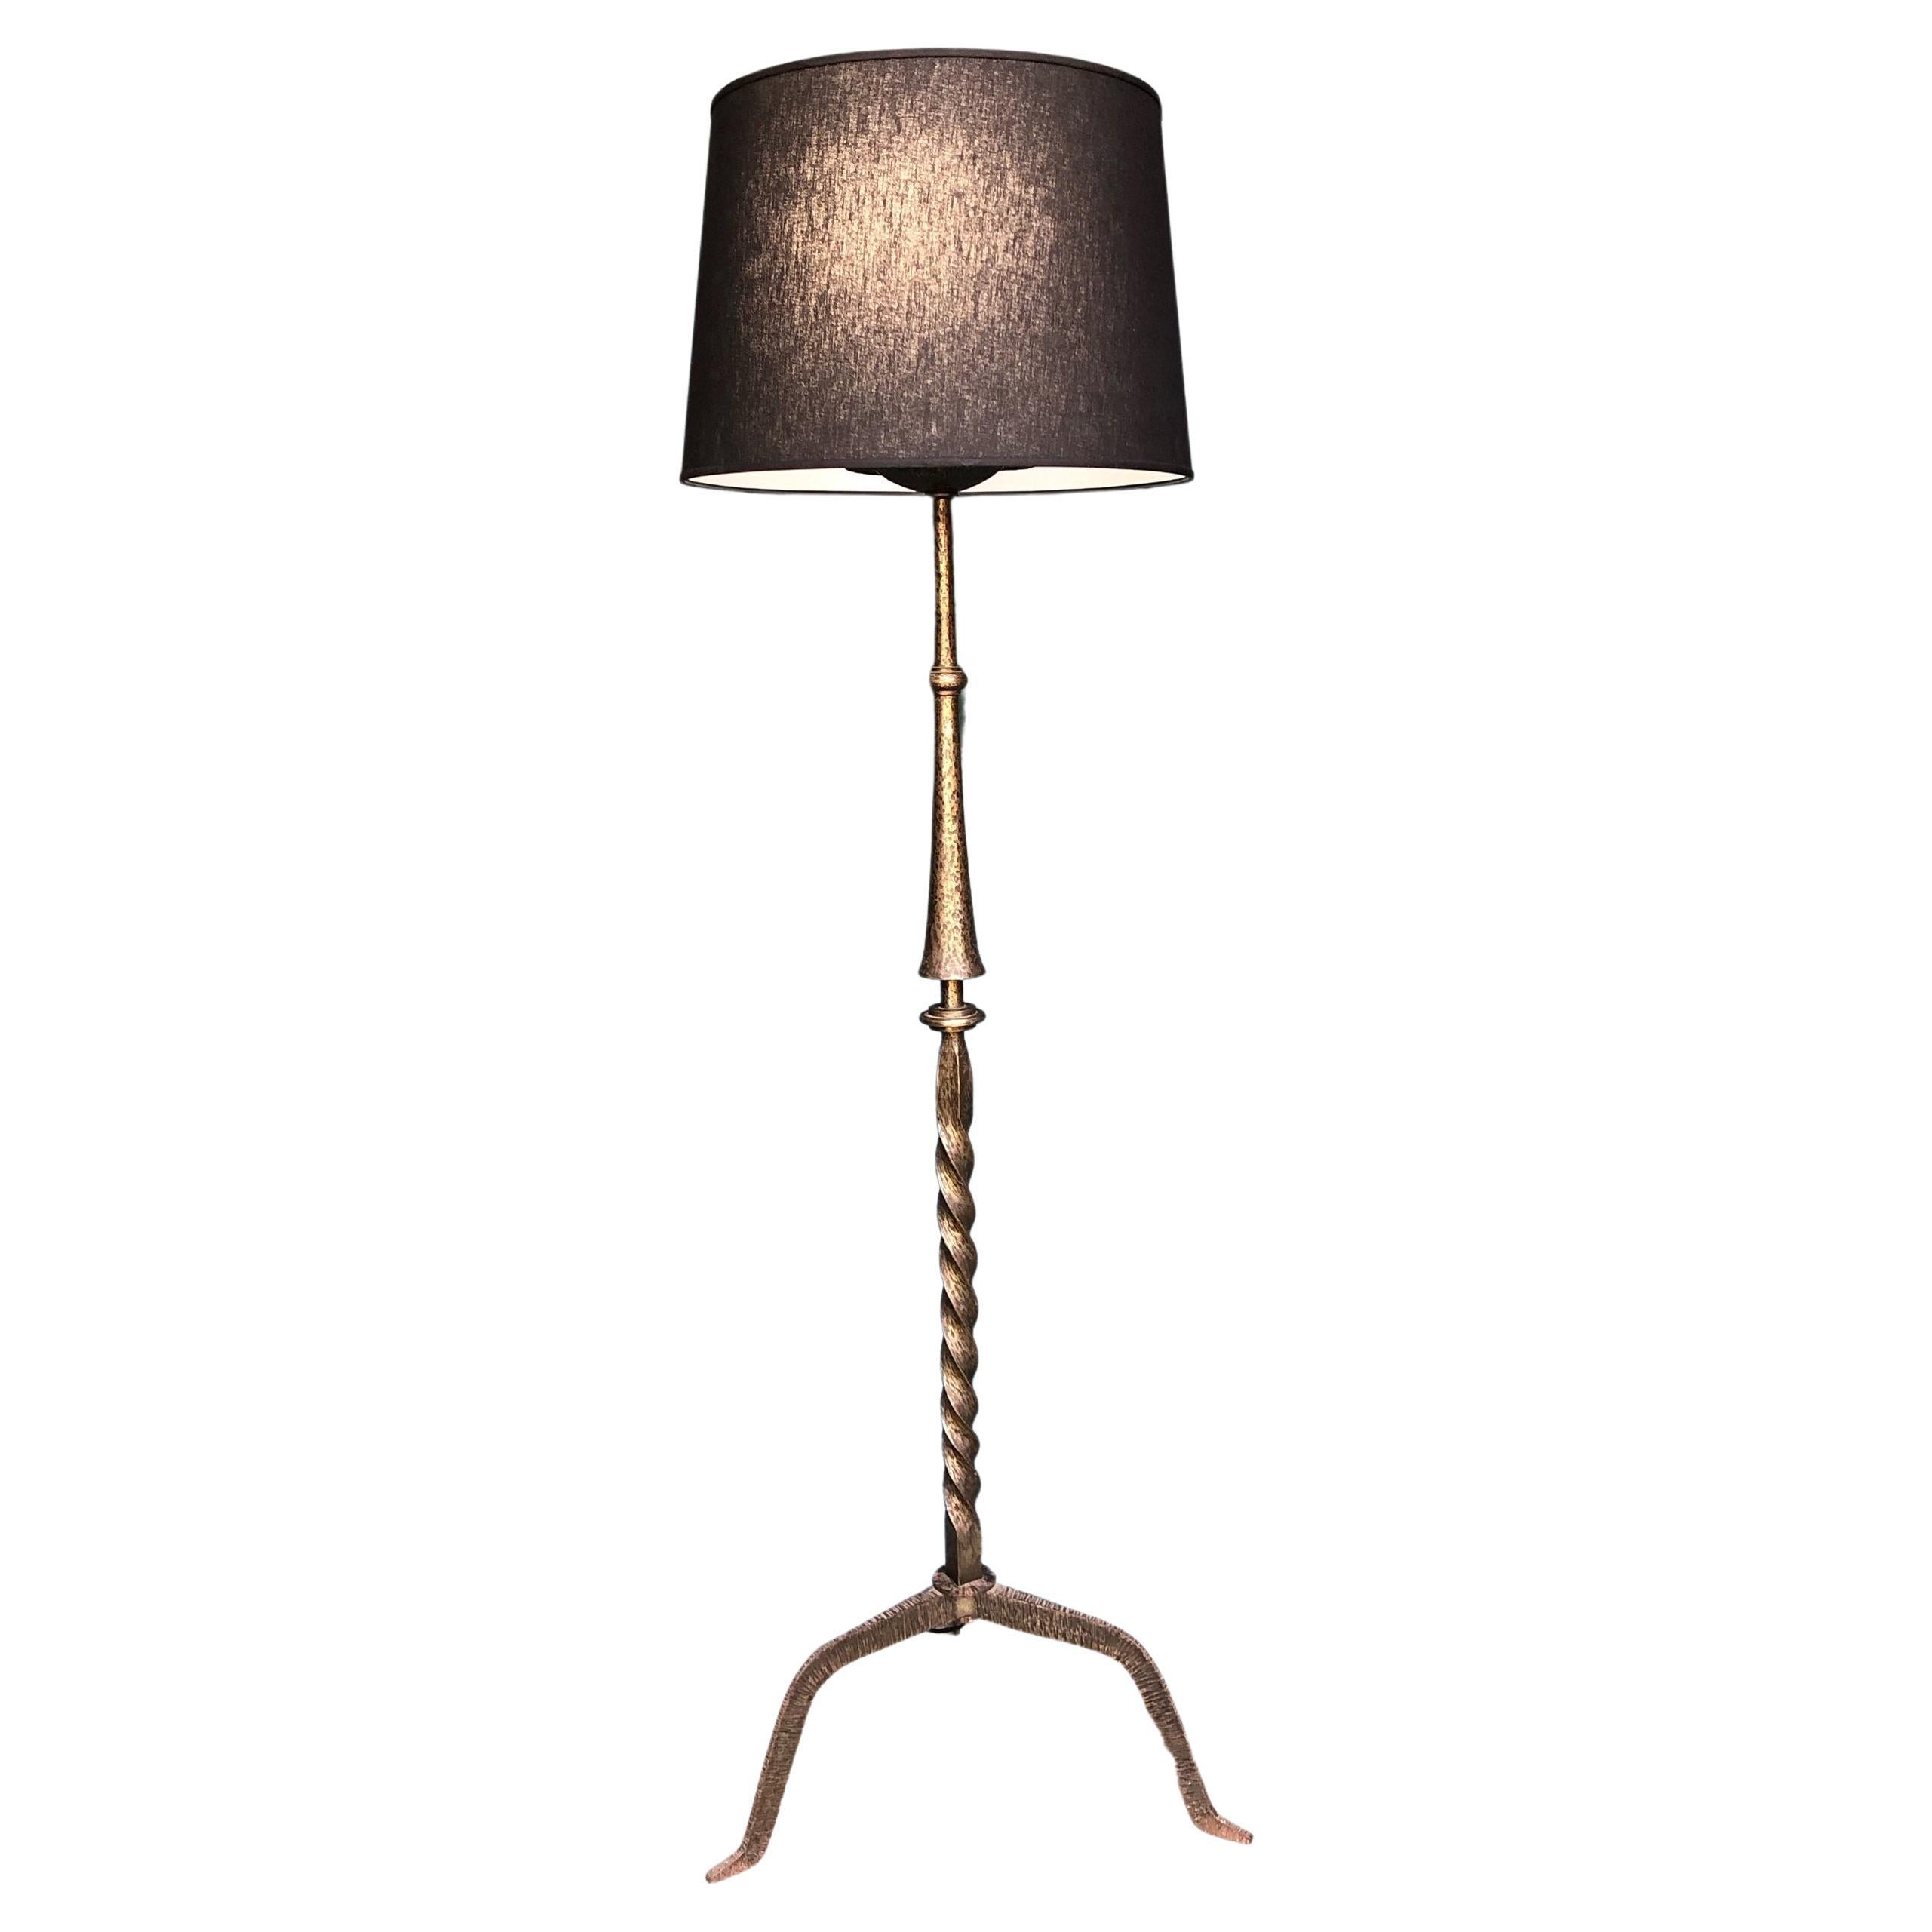 French 1950s Modernist Iron Floor Lamp